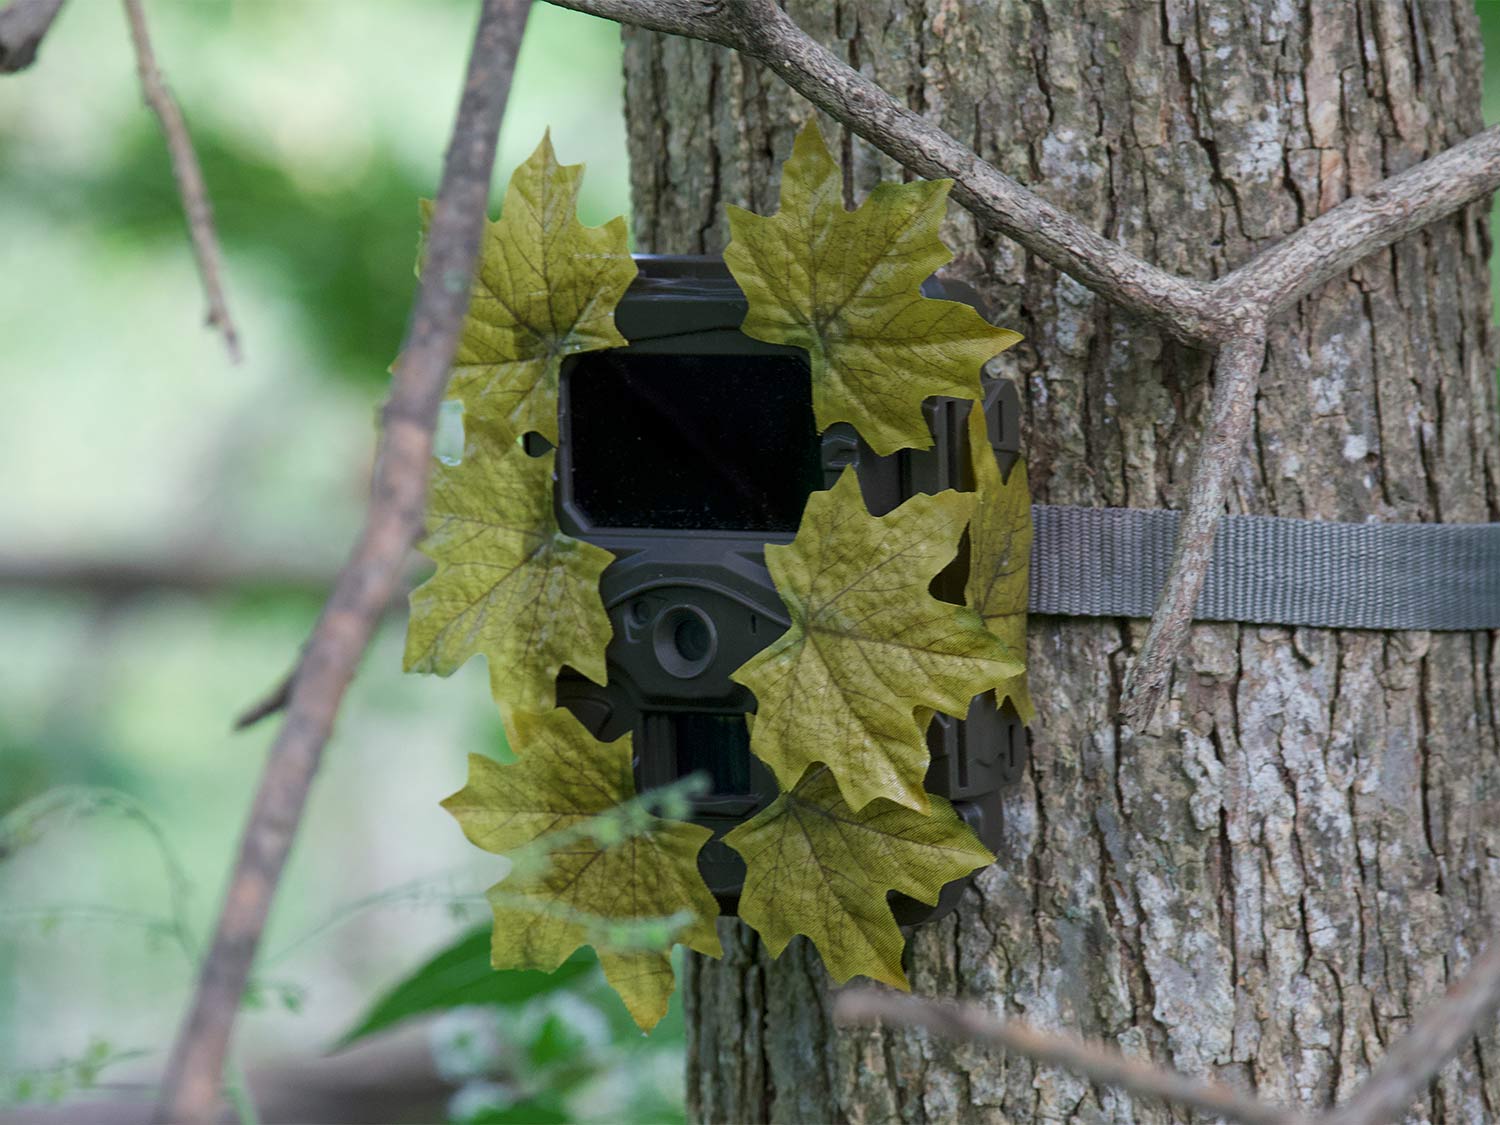 camoflage trail camera